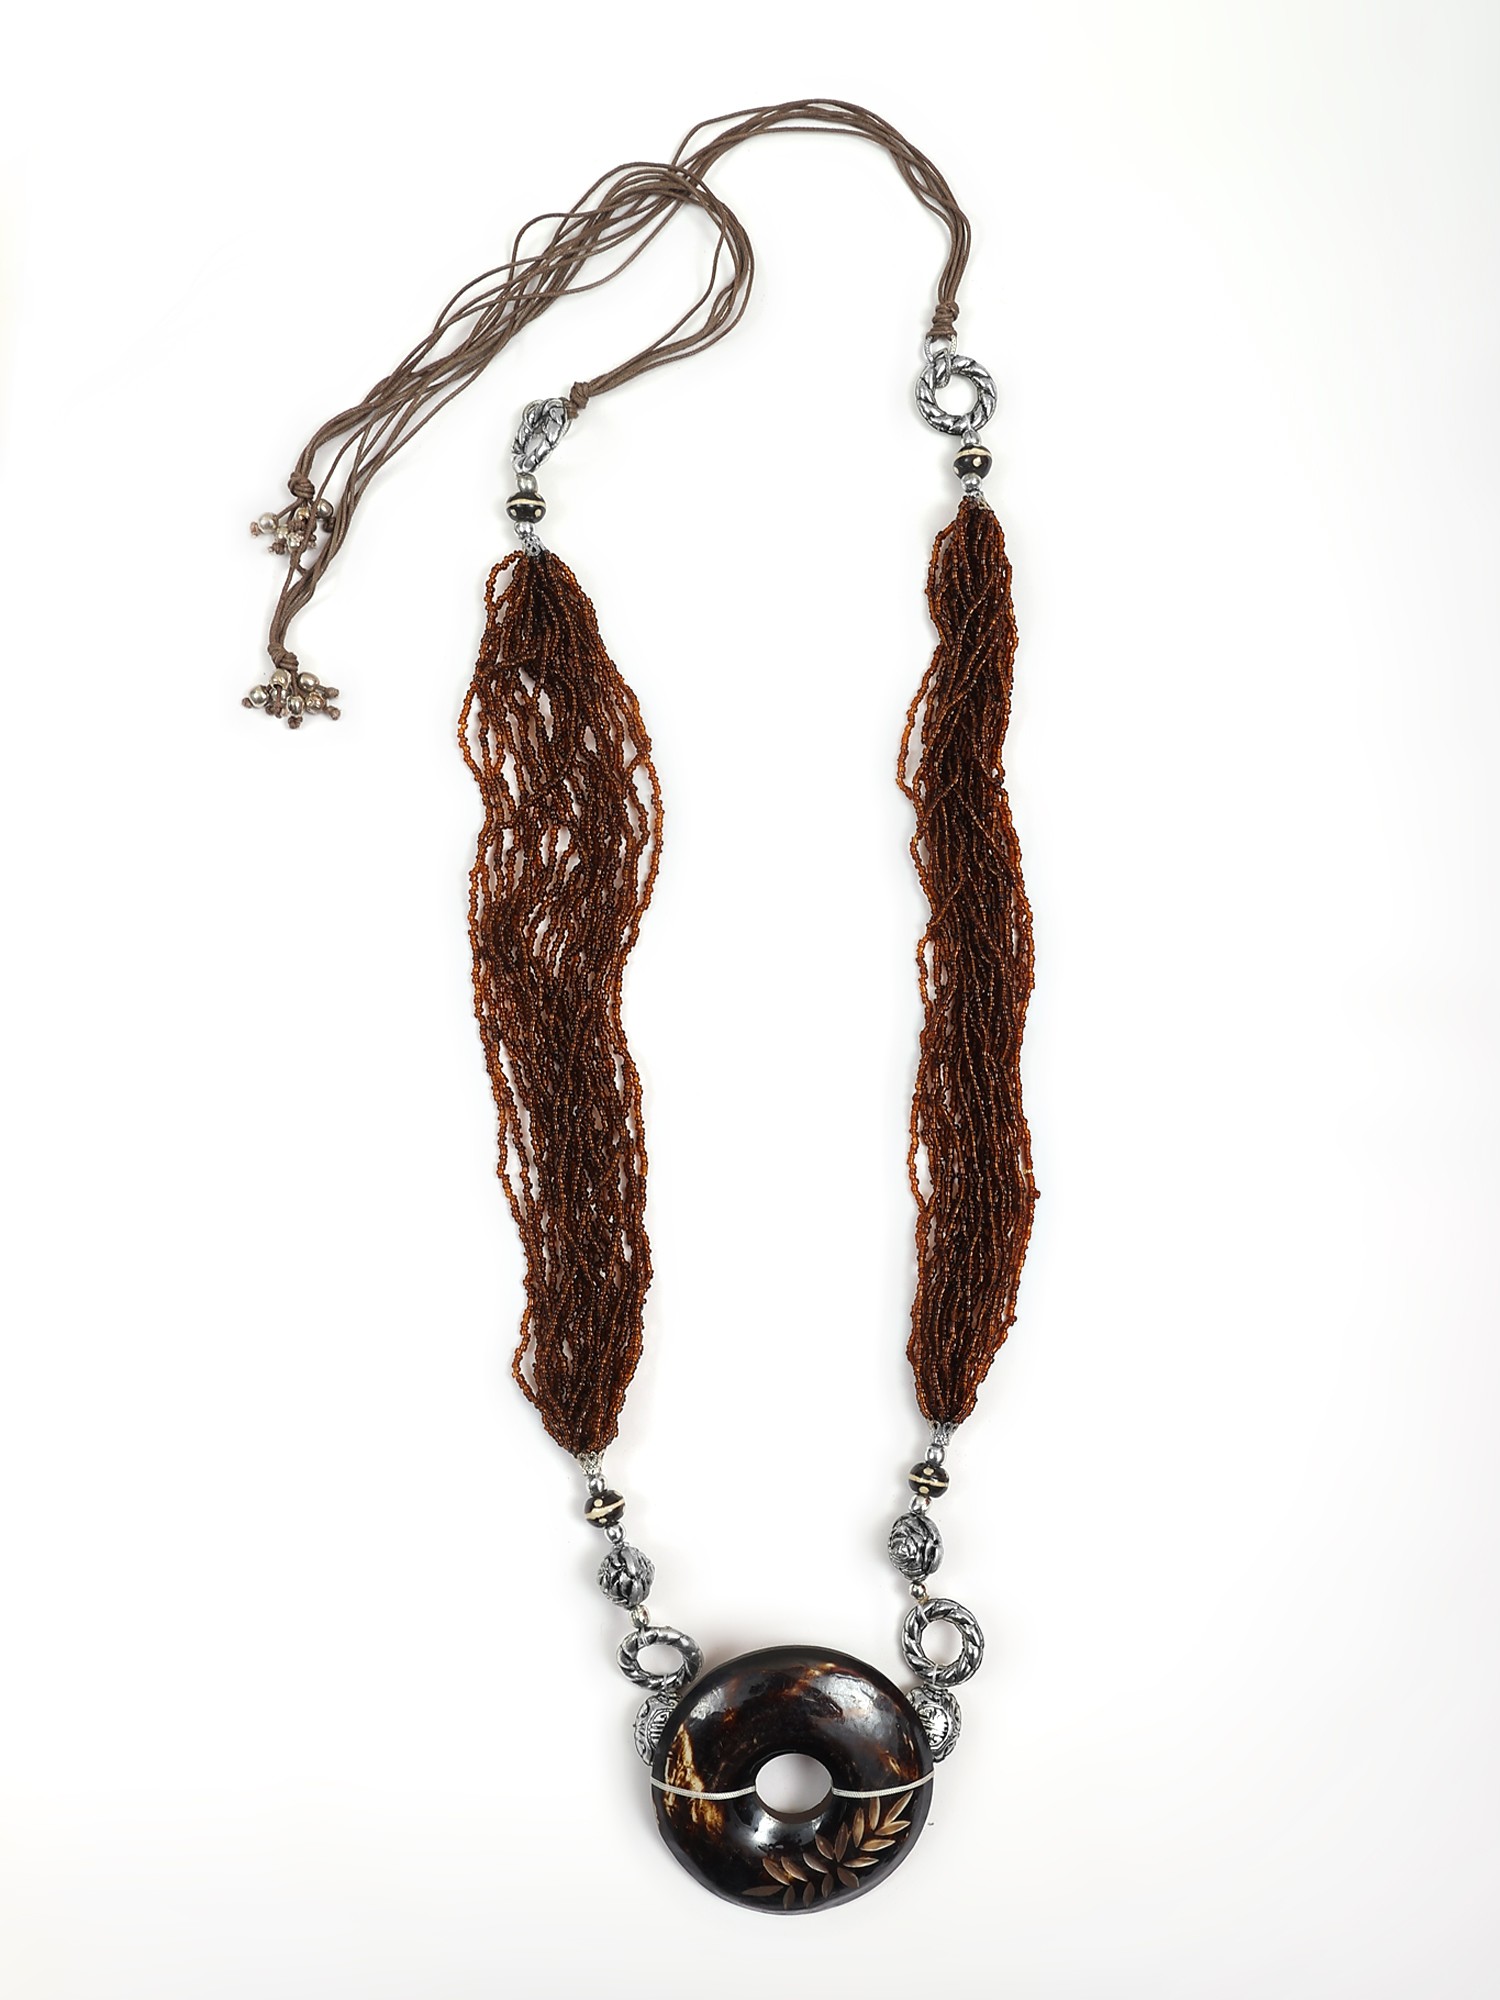 Buy Online Indian long necklace, Ethnic Oxidized Necklace Set/ Indian  Jewelry/ Boho necklace/ Bib neckla - Zifiti.com 1078811